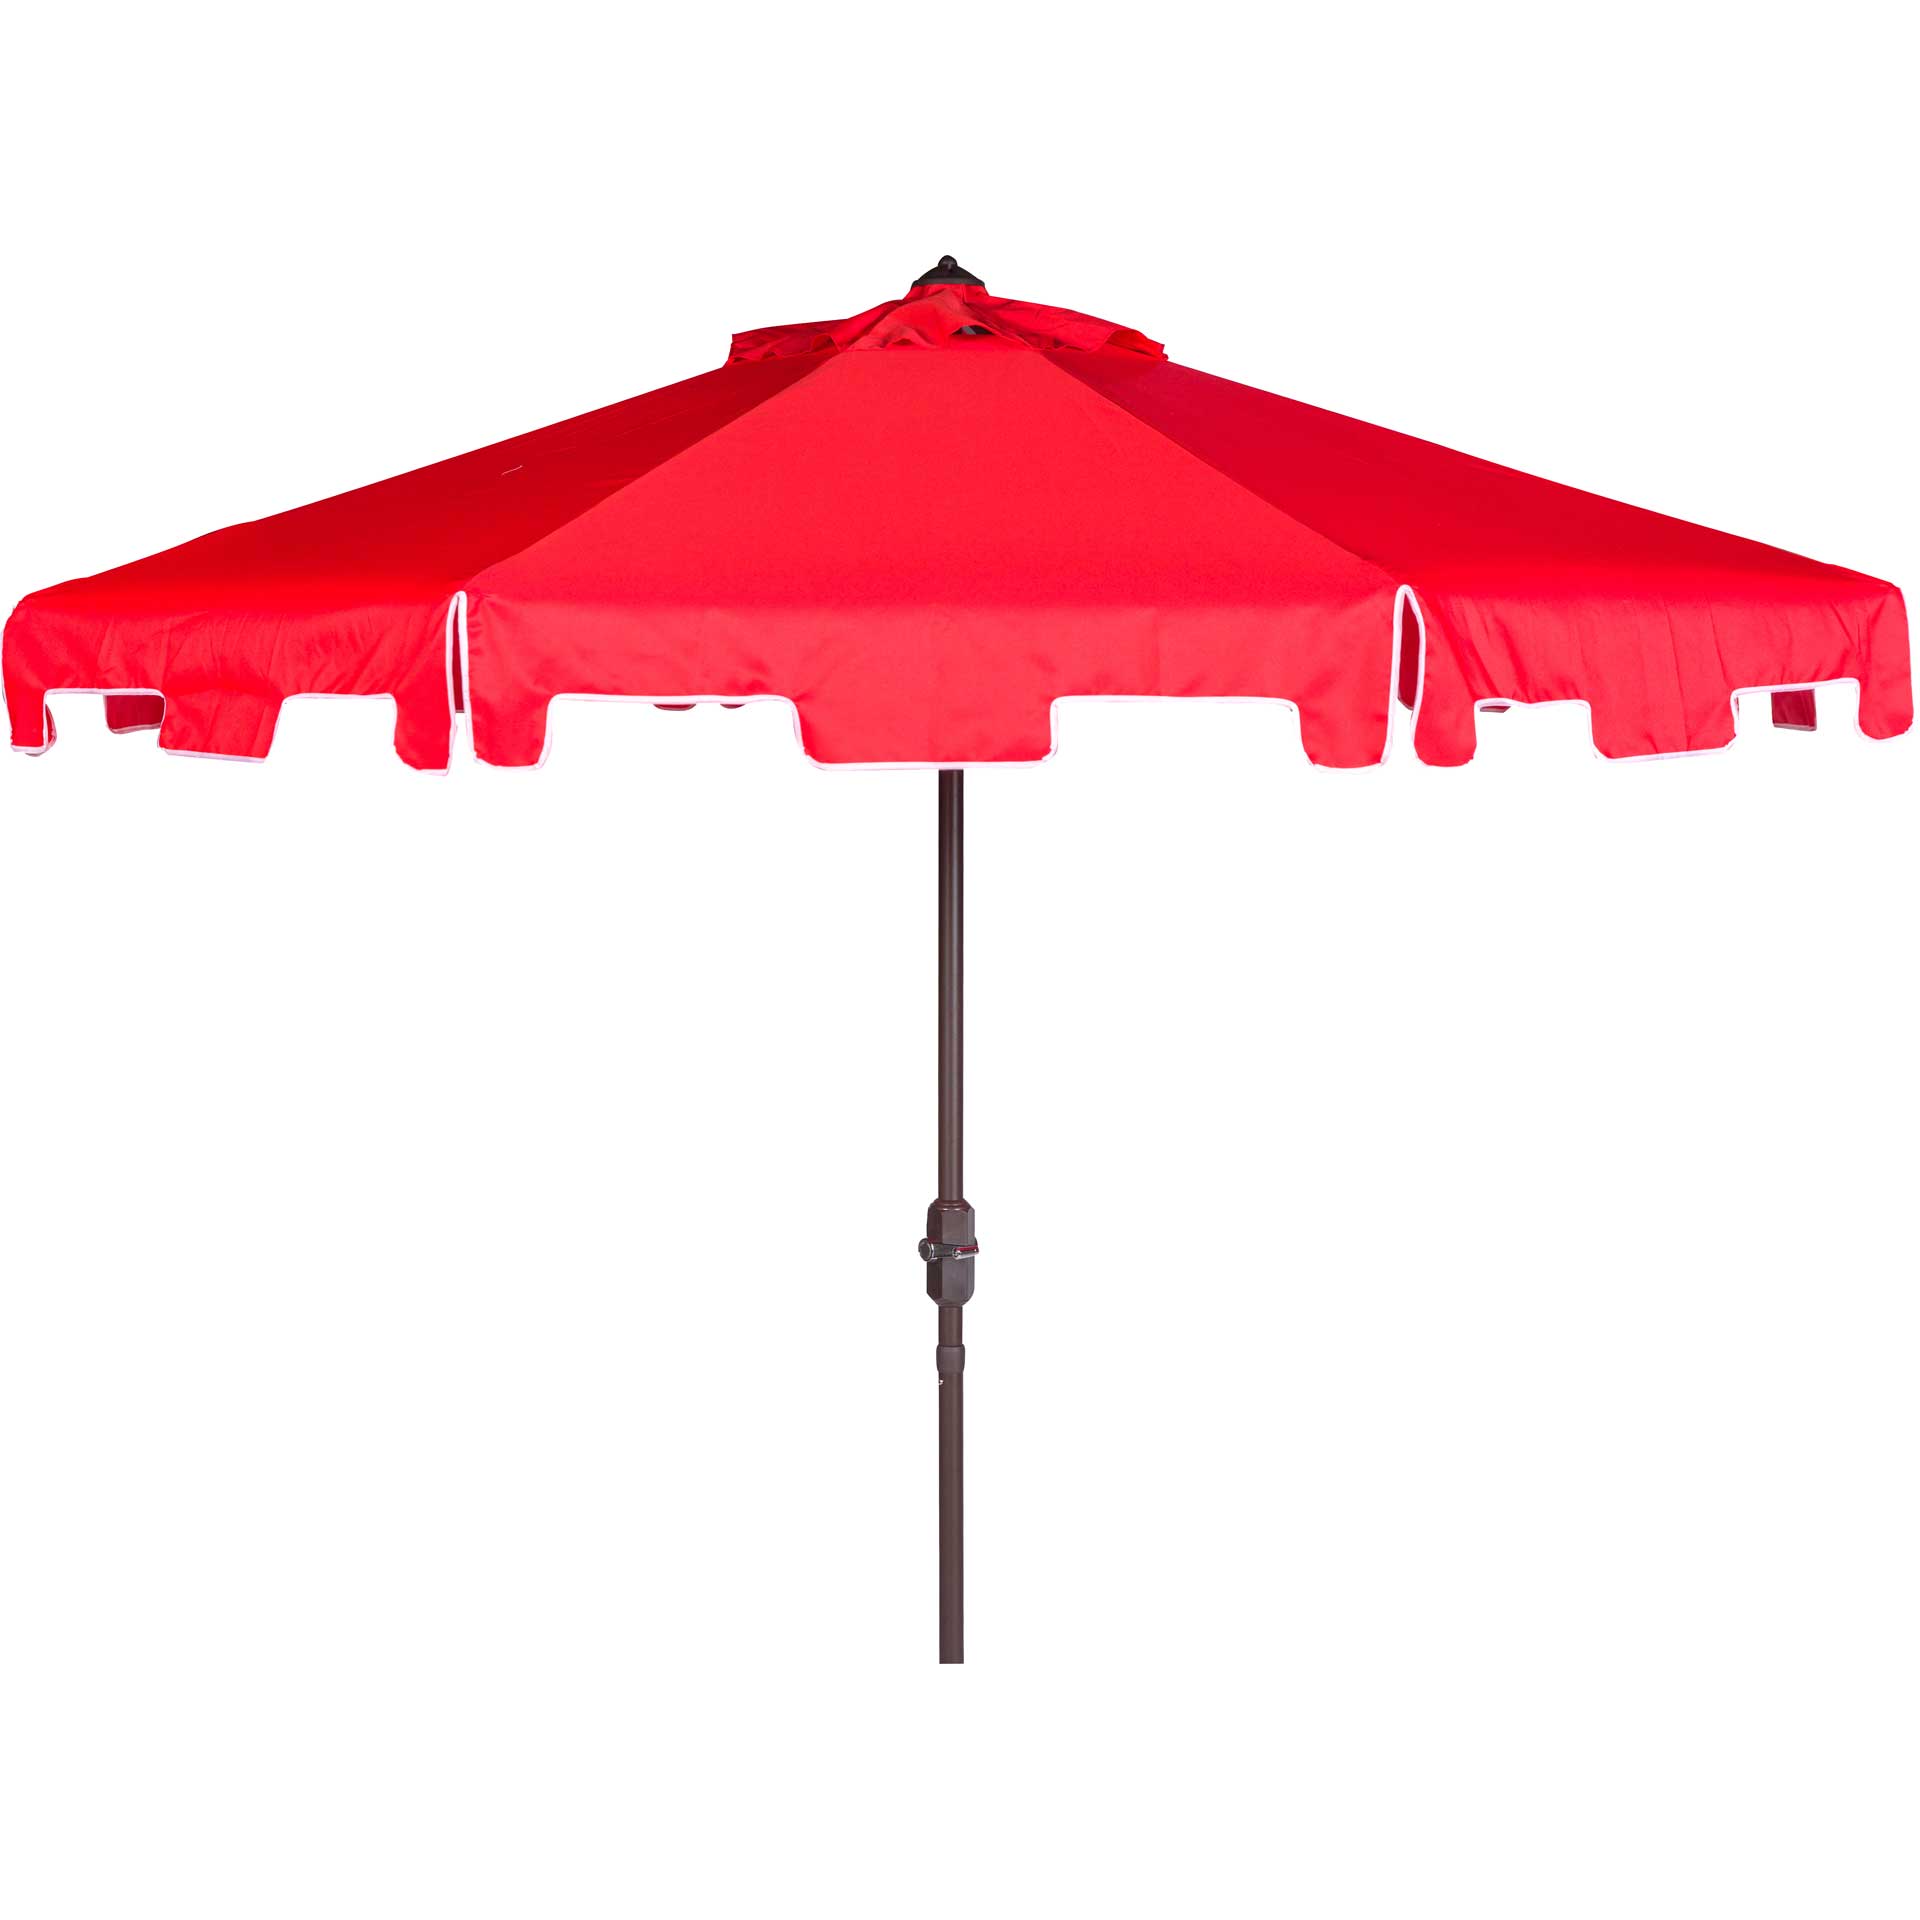 Zinnia Uv Resistant Push Button Tilt Umbrella Red/White